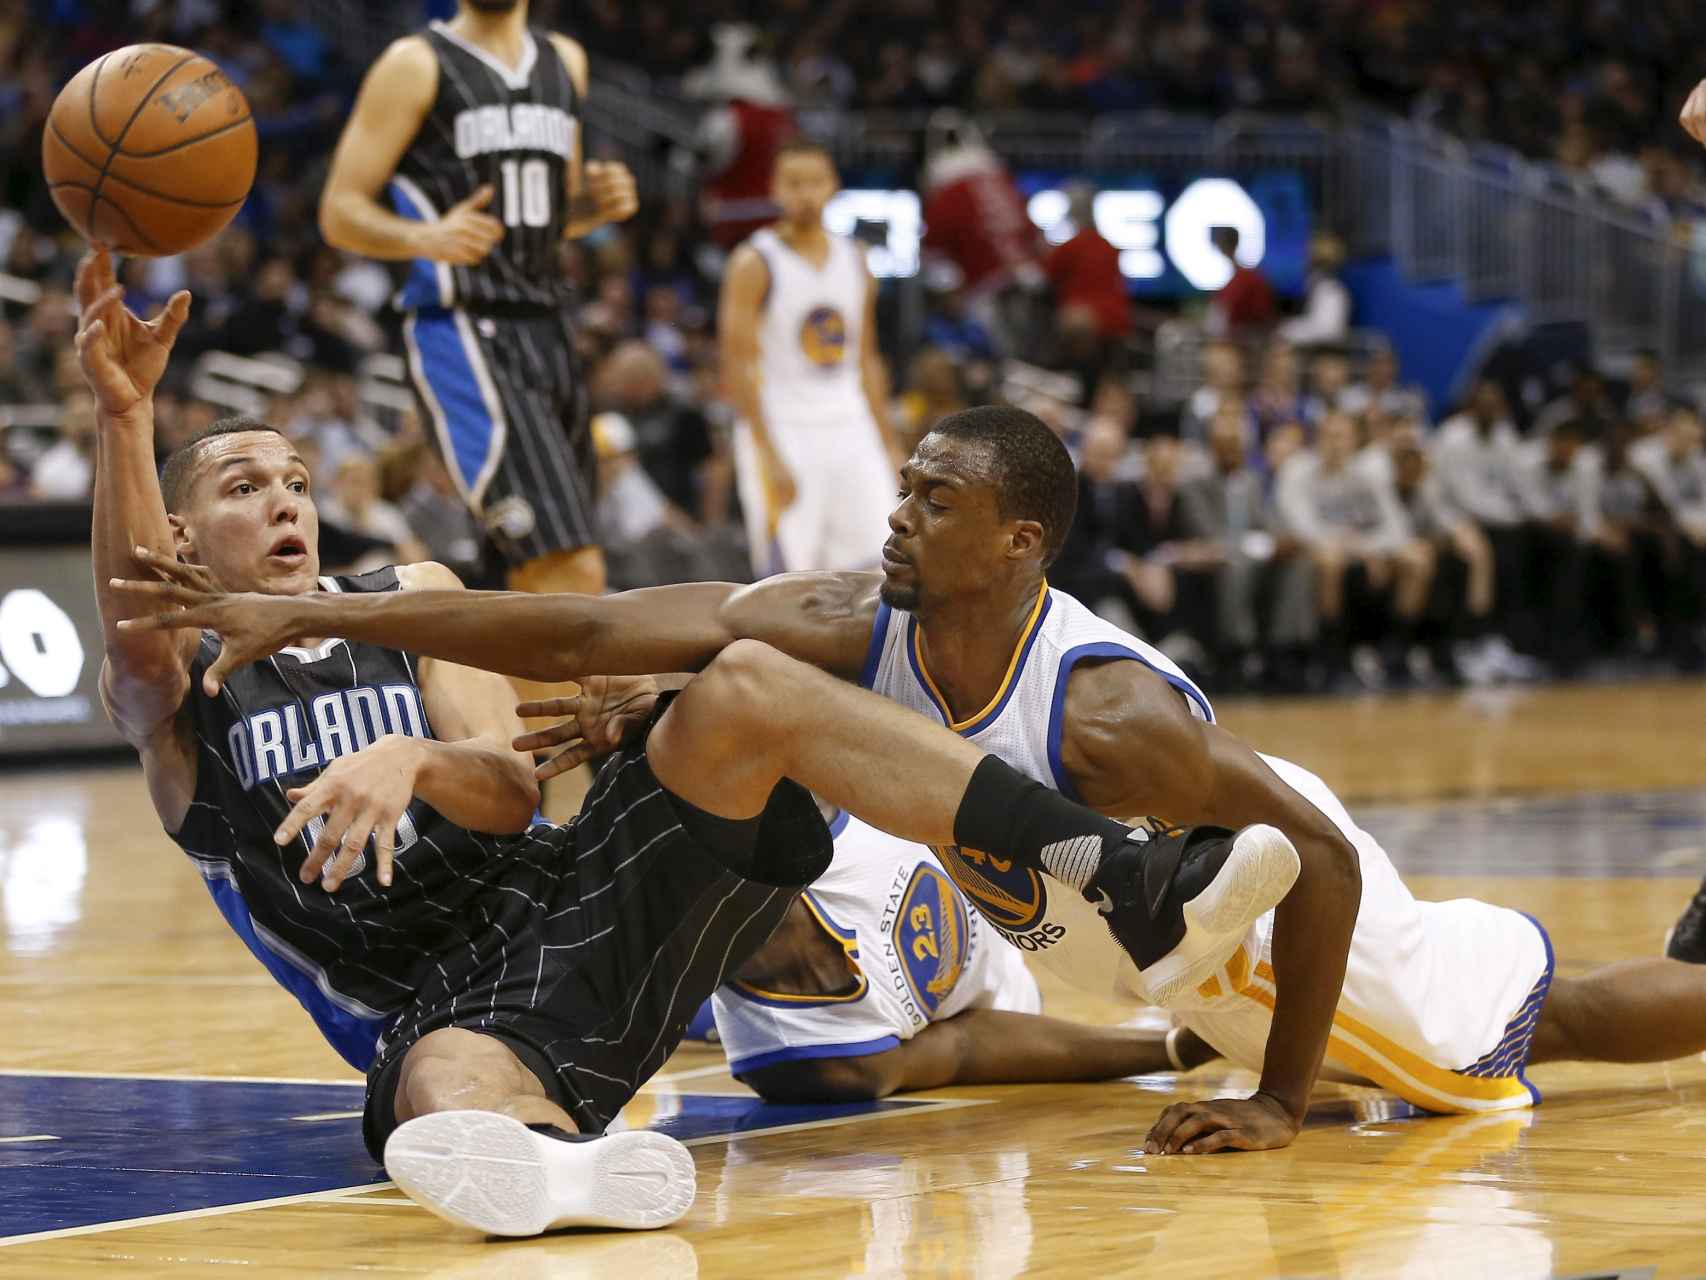 Partido de baloncesto de la NBA/ Reinhold Matay-USA Today/Reuters